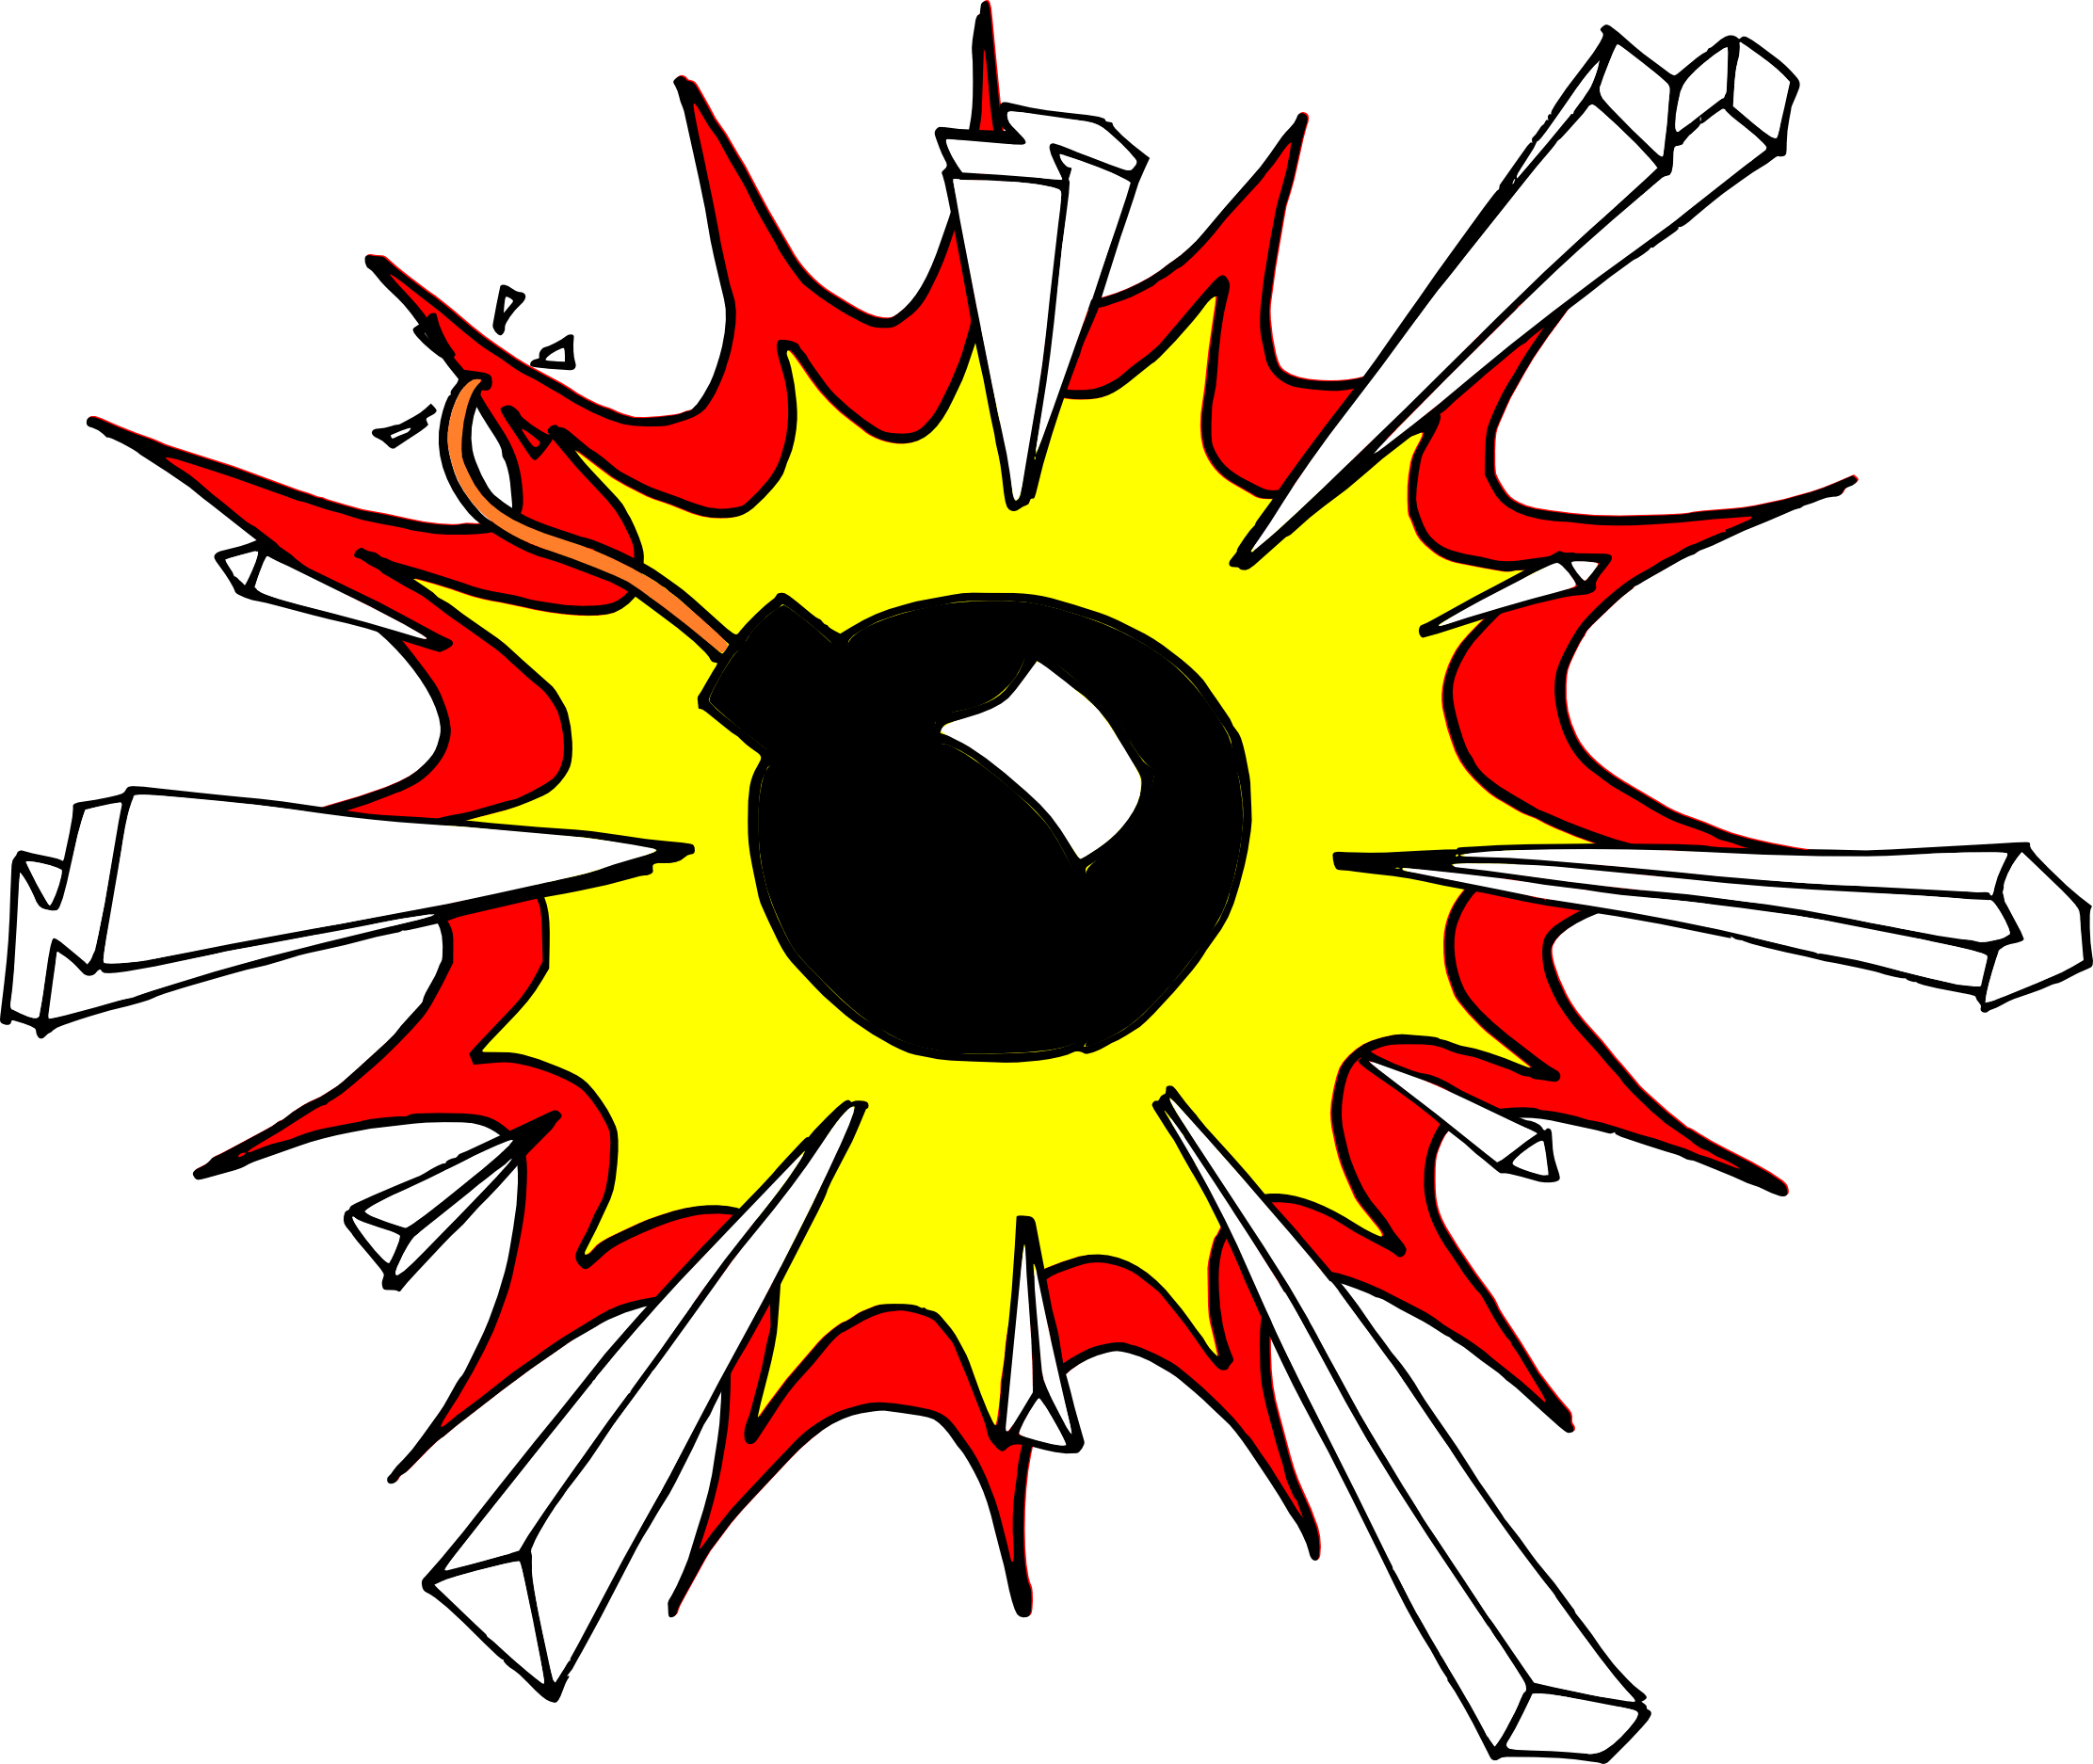 A Cartoon Of A Bomb Exploding